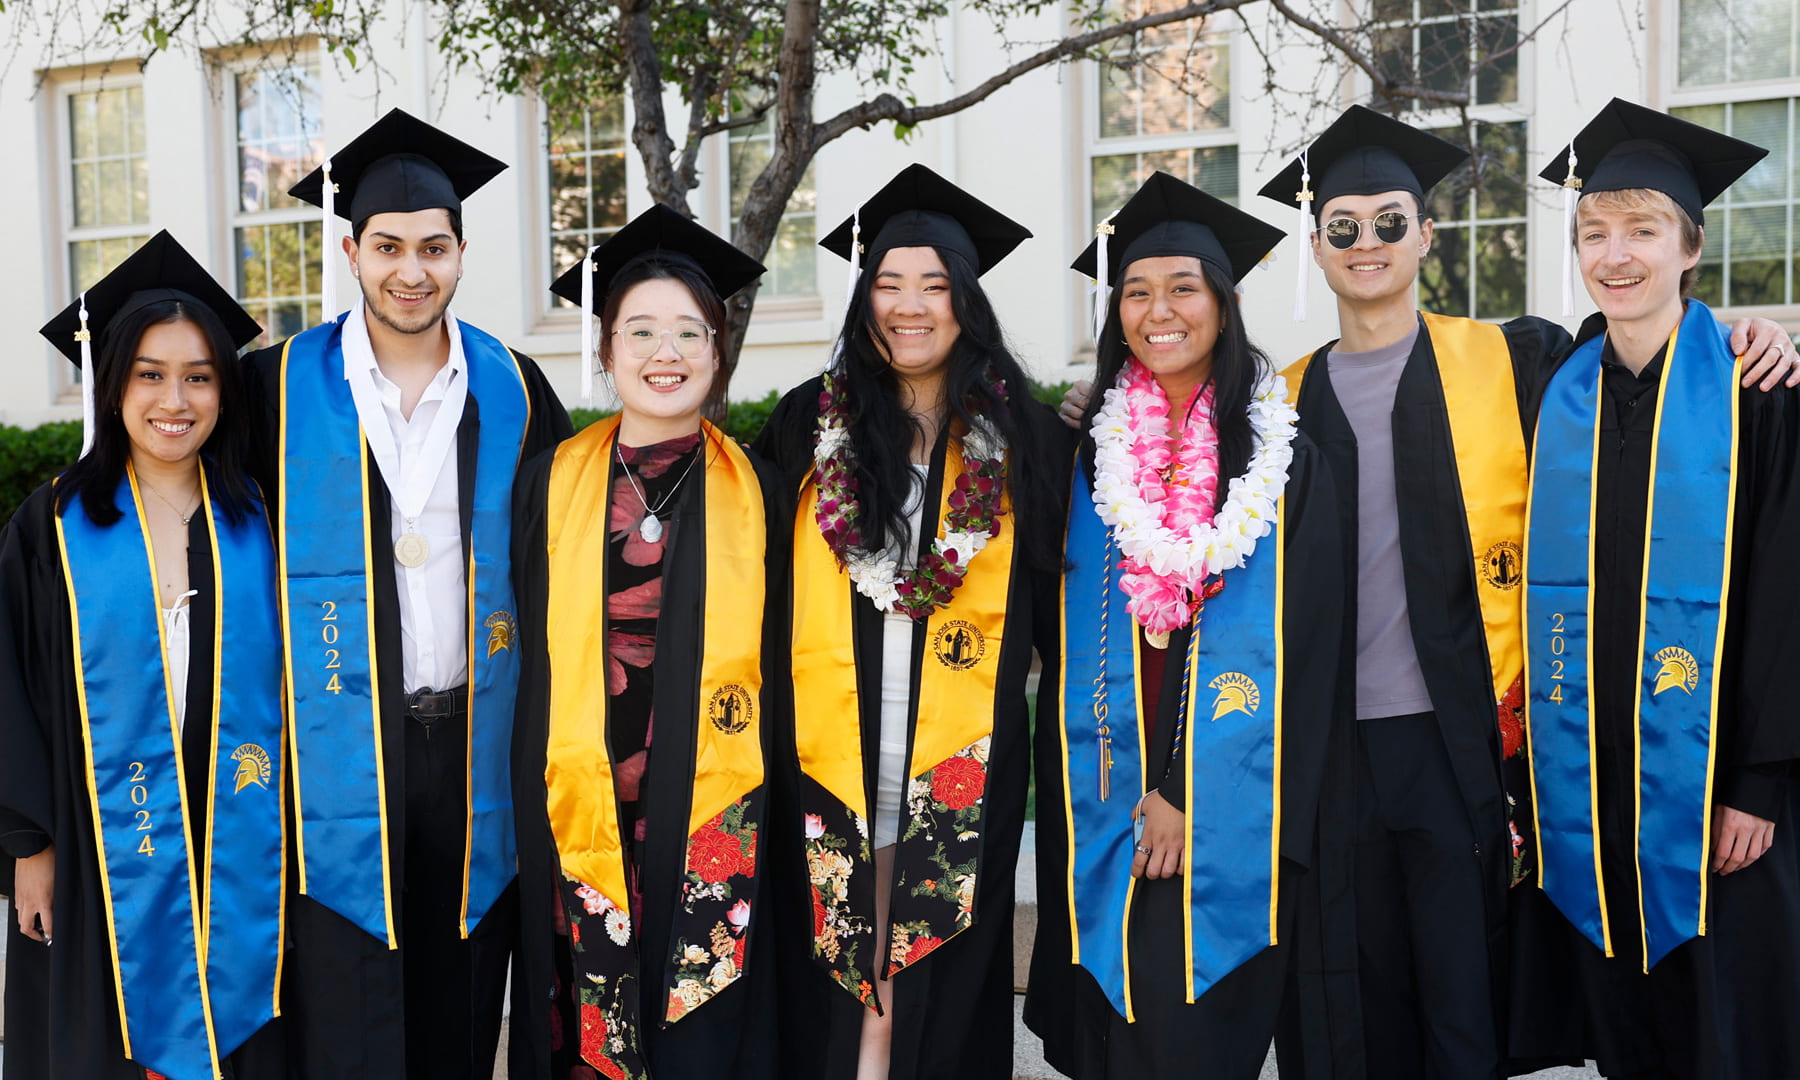 A diverse group of 7 SJSU Graduates